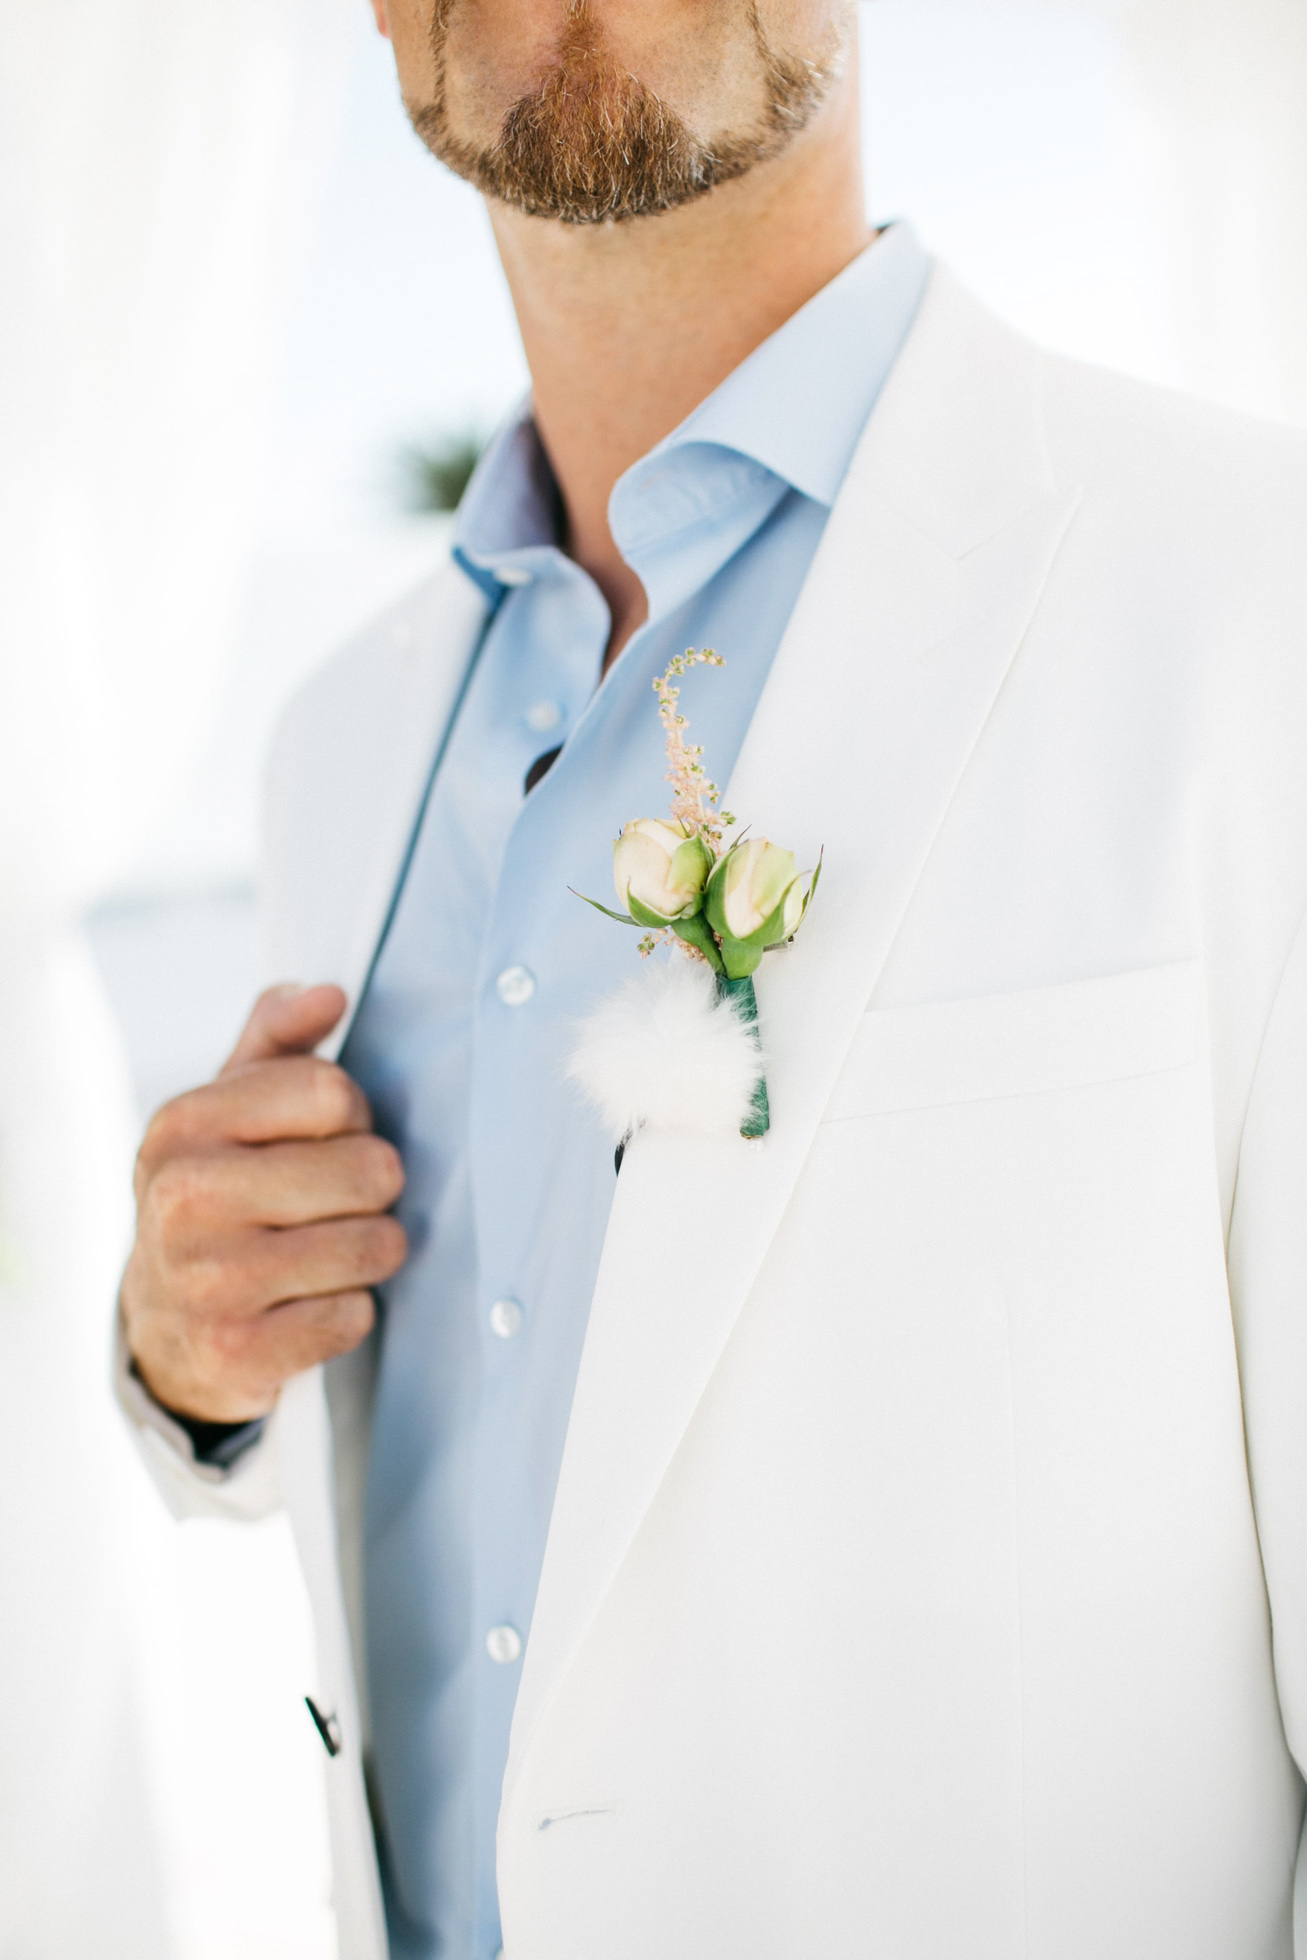 Groom's boutoniere for luxury white wedding in Santorini island, Greece.